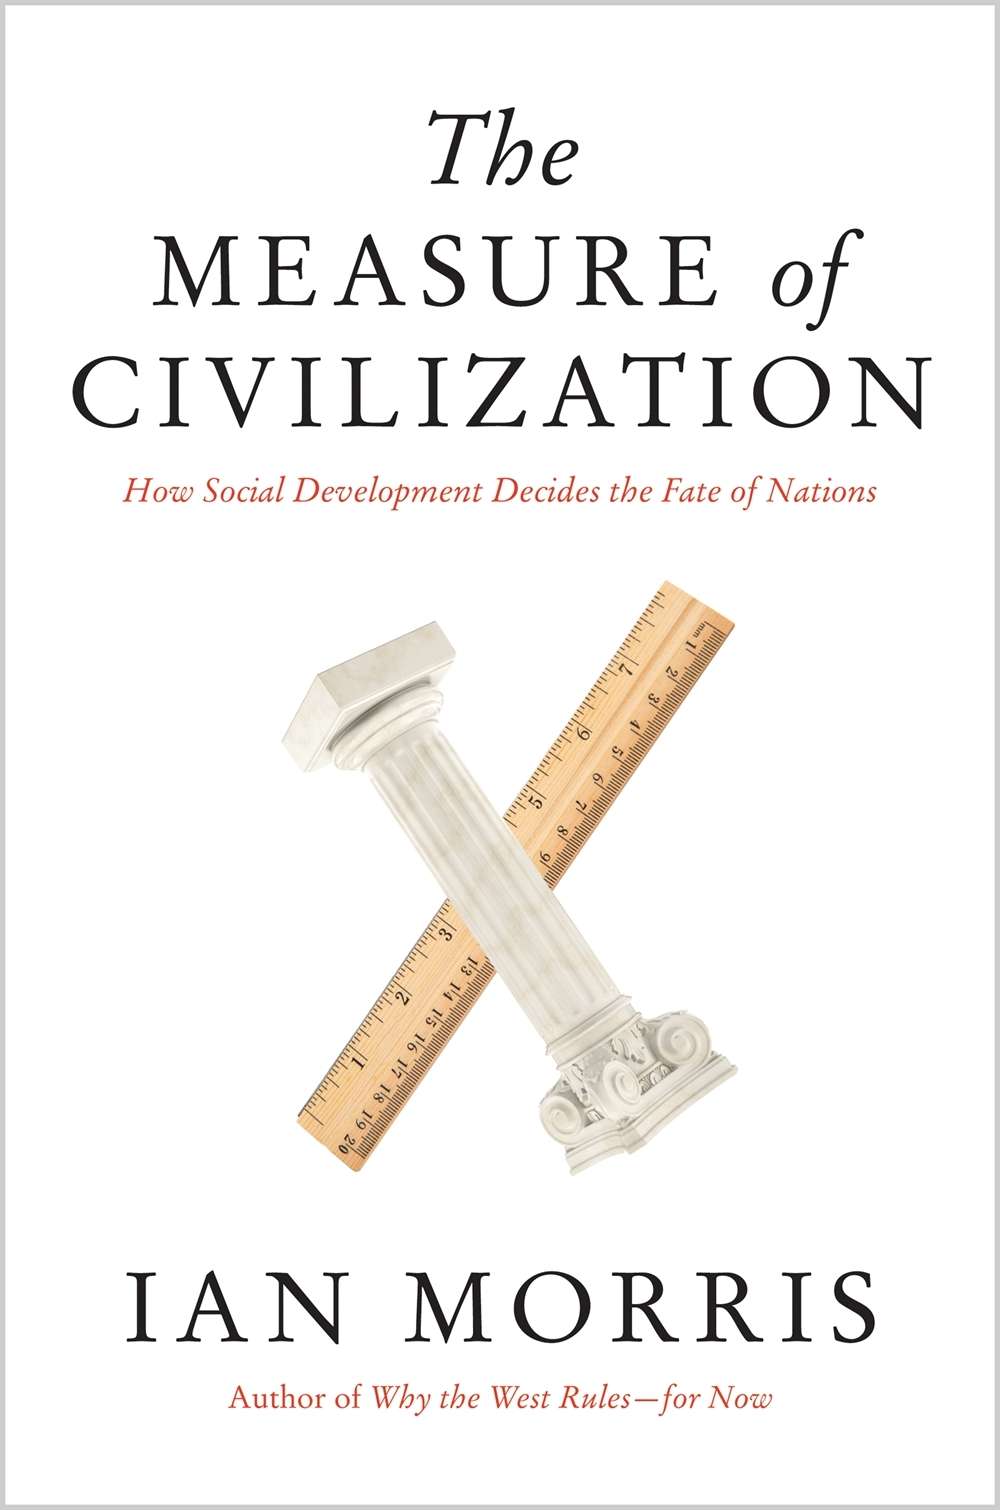 The Measure of Civilization